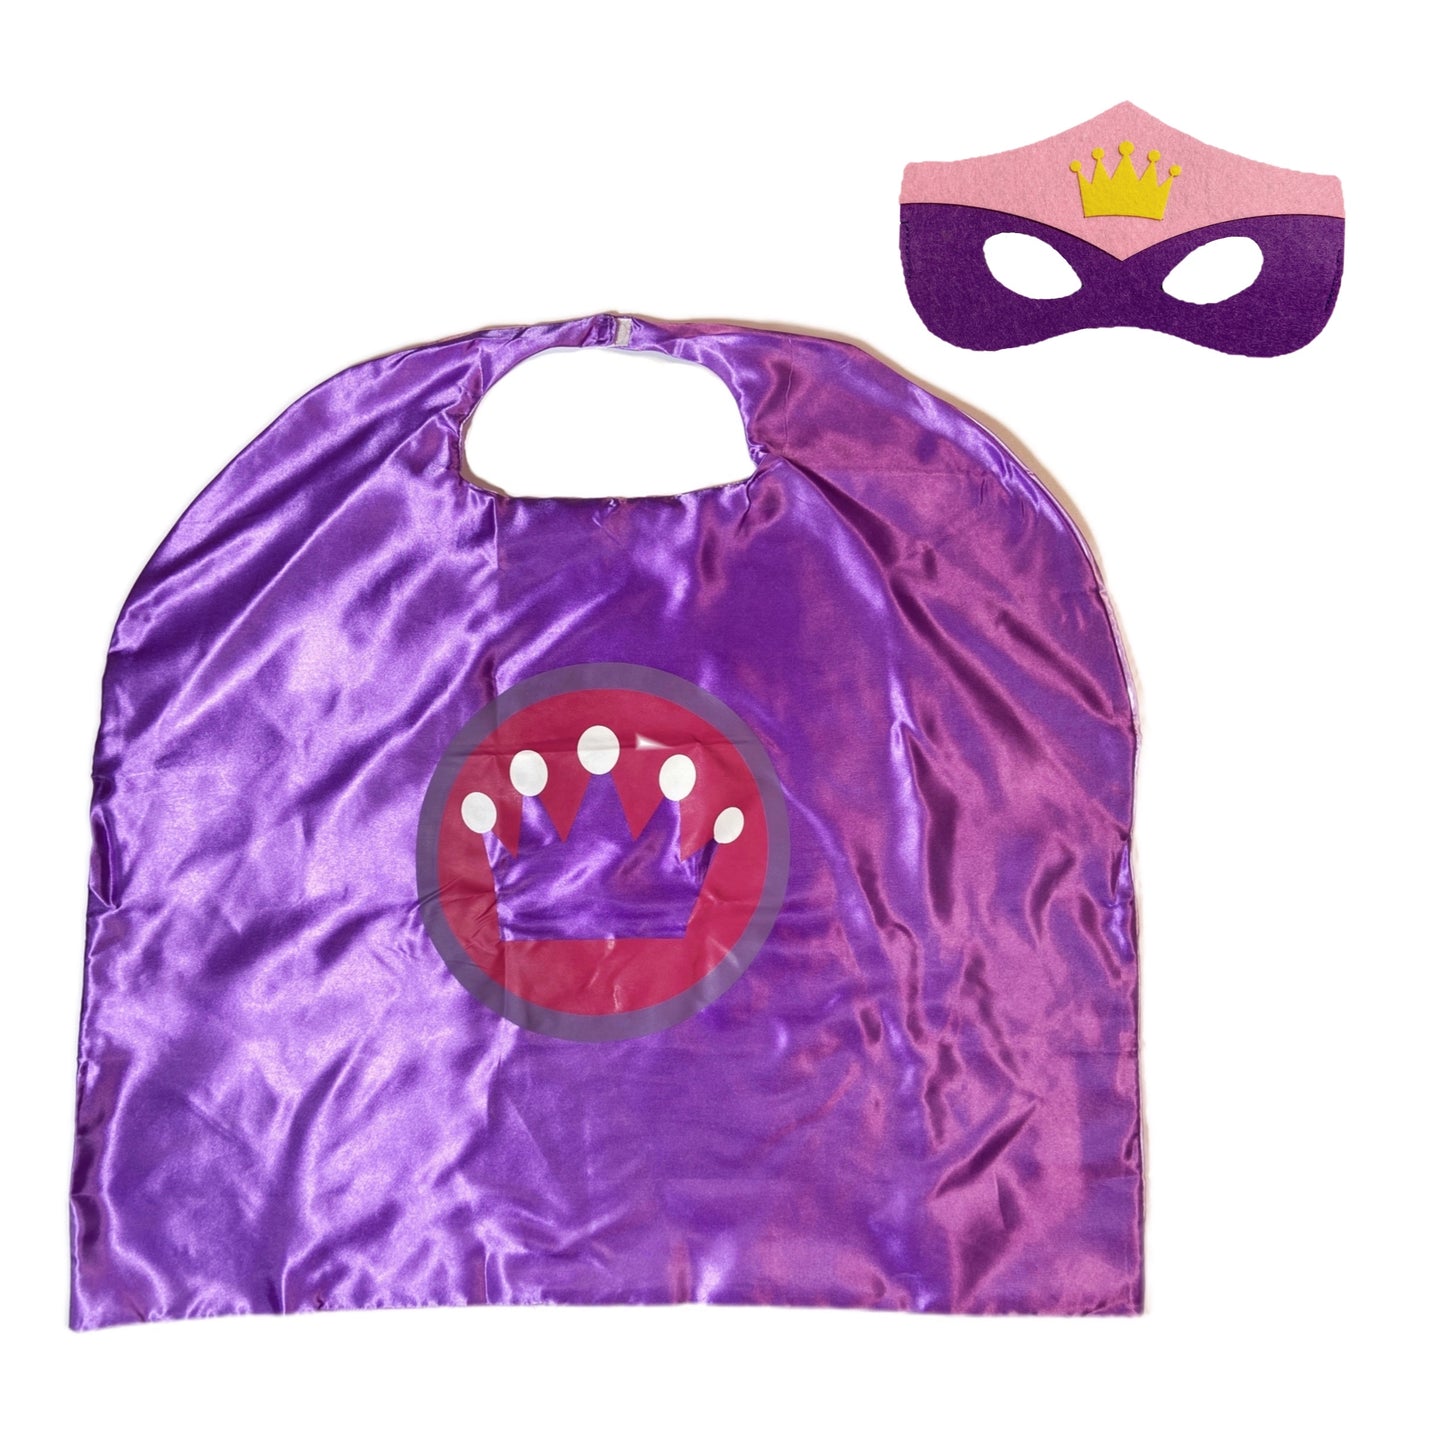 Superhero Cape and Mask Set - Princess Costume for Girl